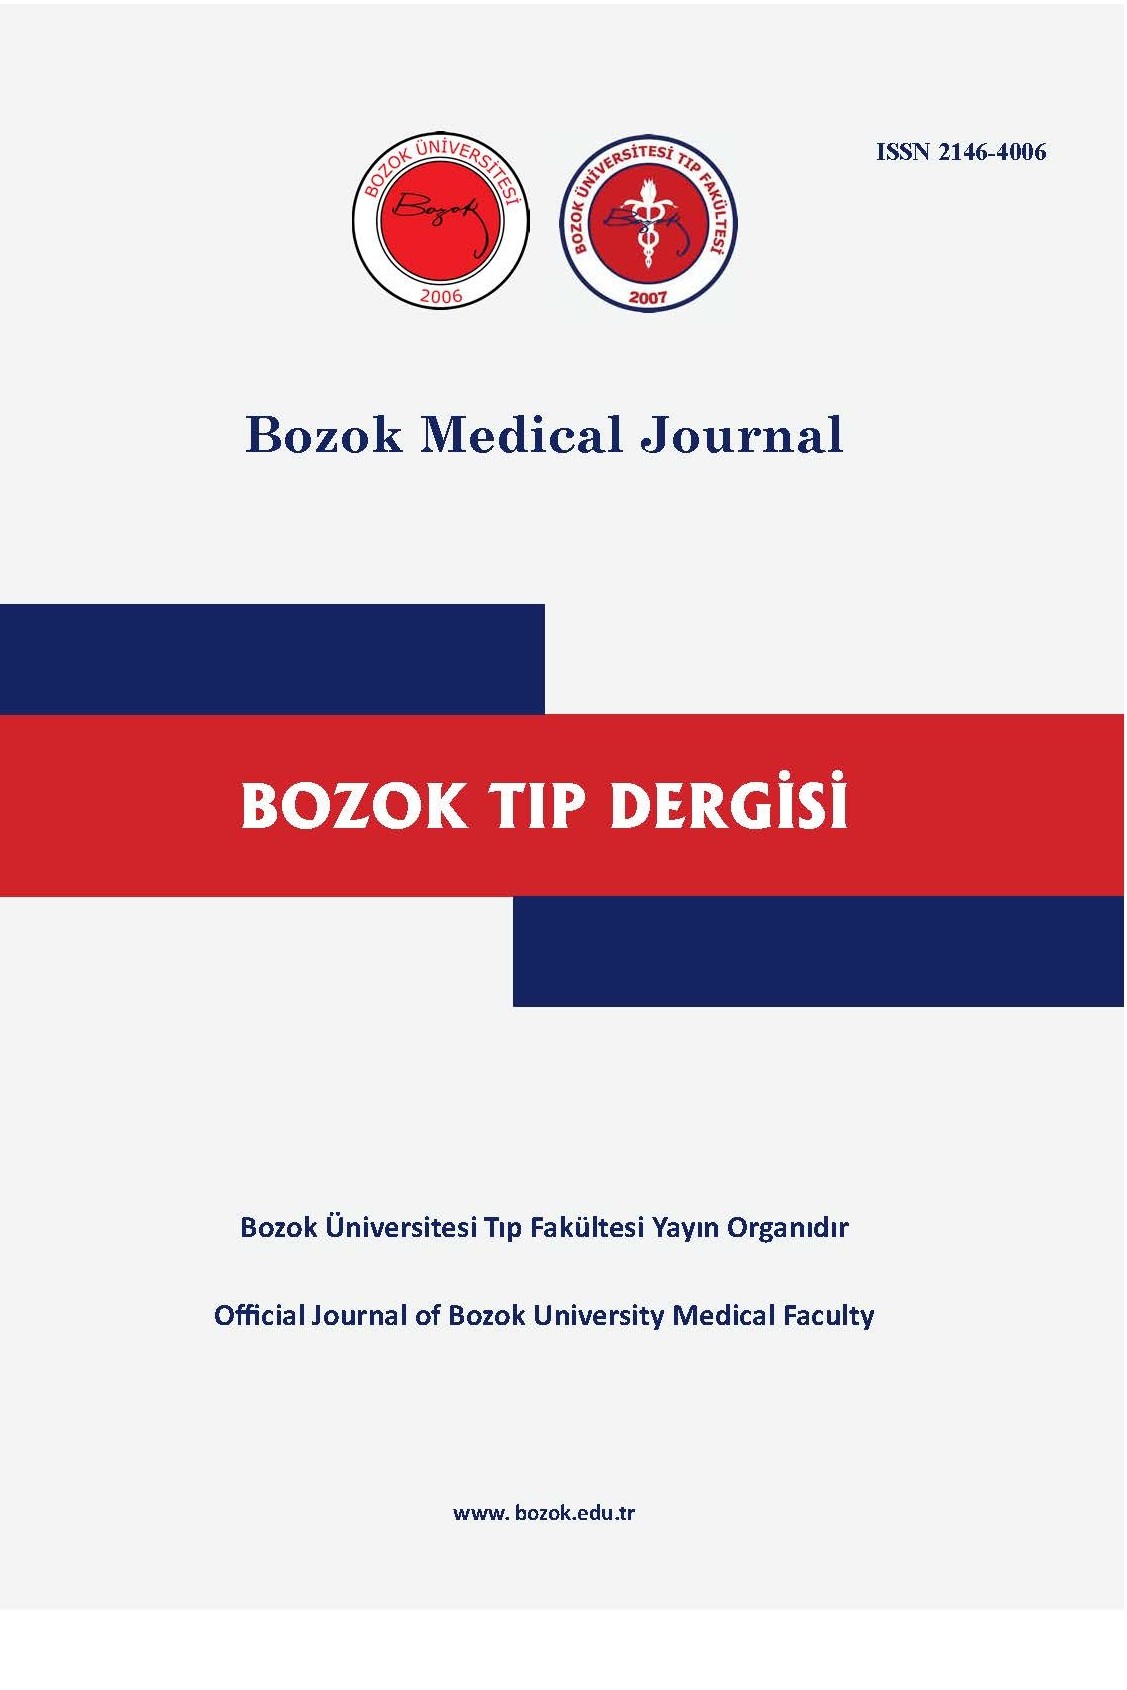 Bozok Medical Journal